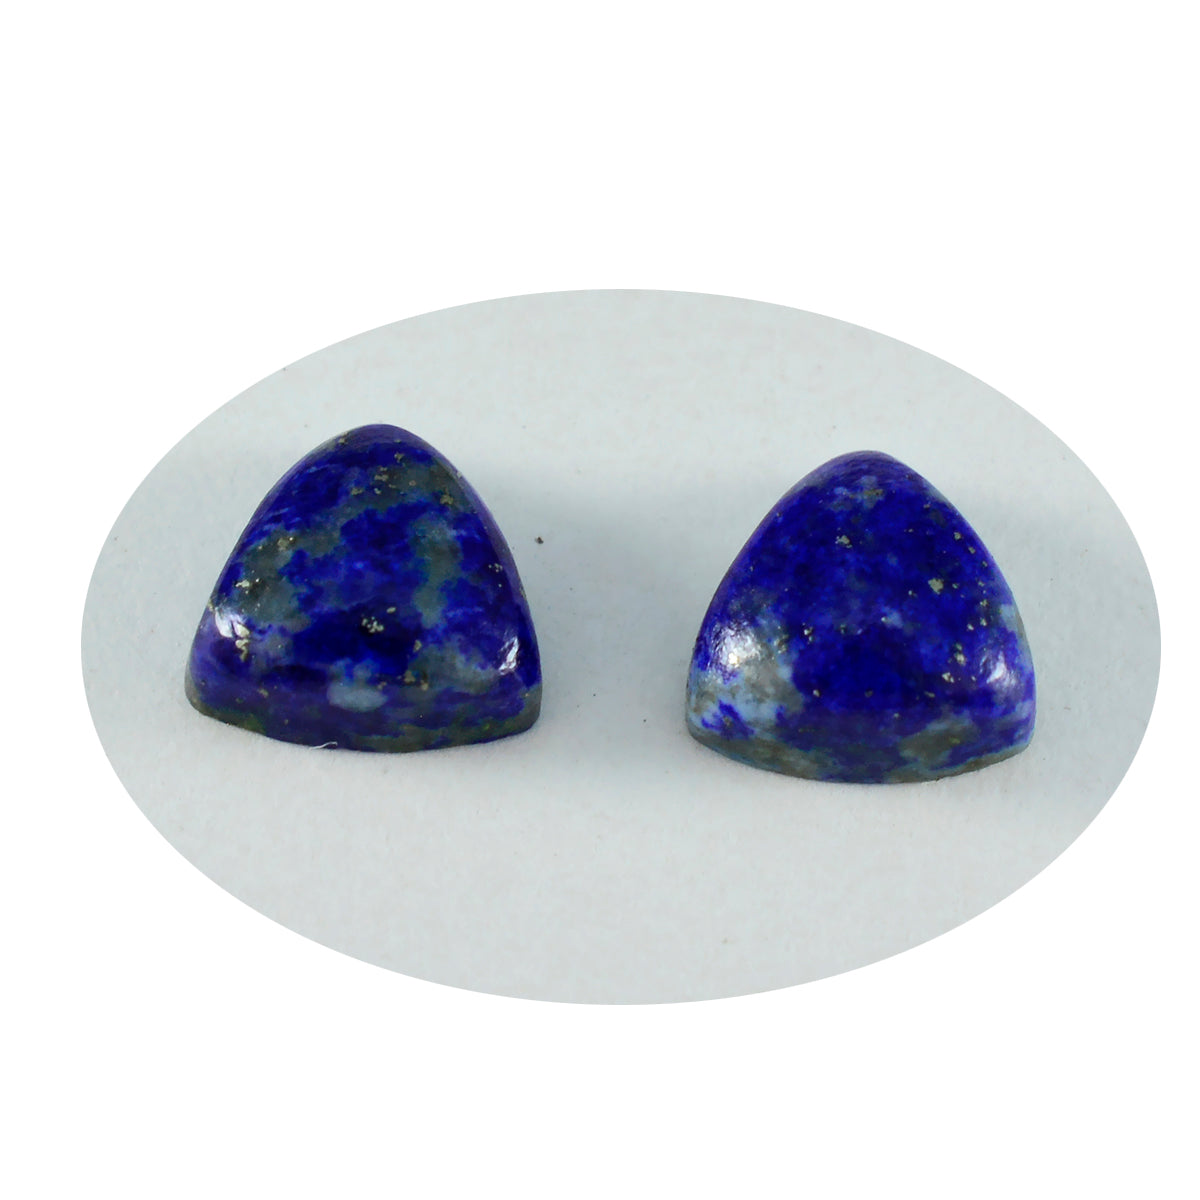 Riyogems 1PC Blue Lapis Lazuli Cabochon 12x12 mm Trillion Shape excellent Quality Gemstone